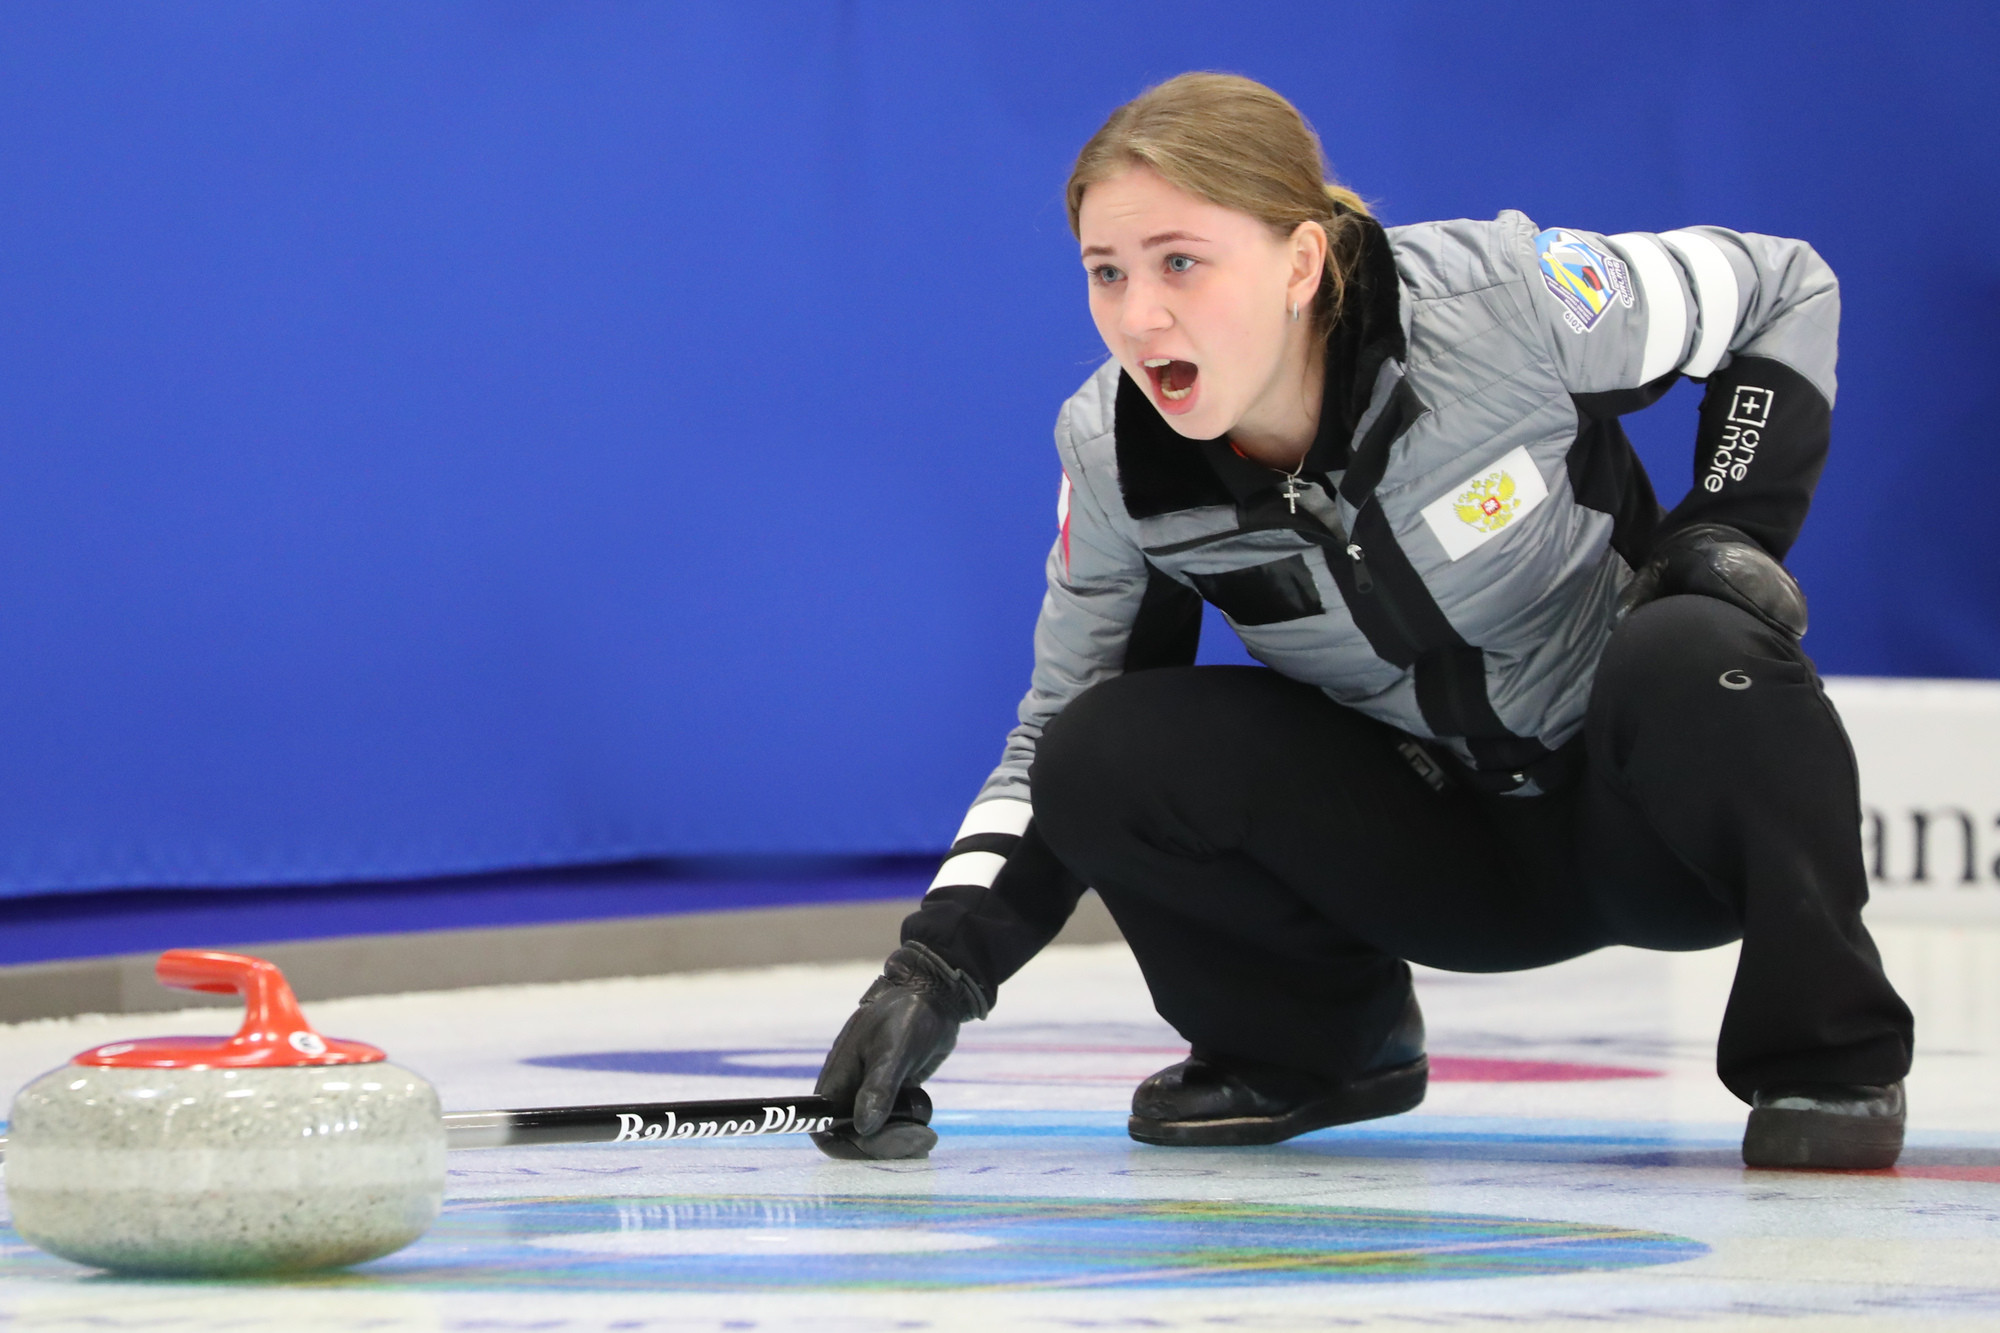 World Junior Curling Championships return to Russia